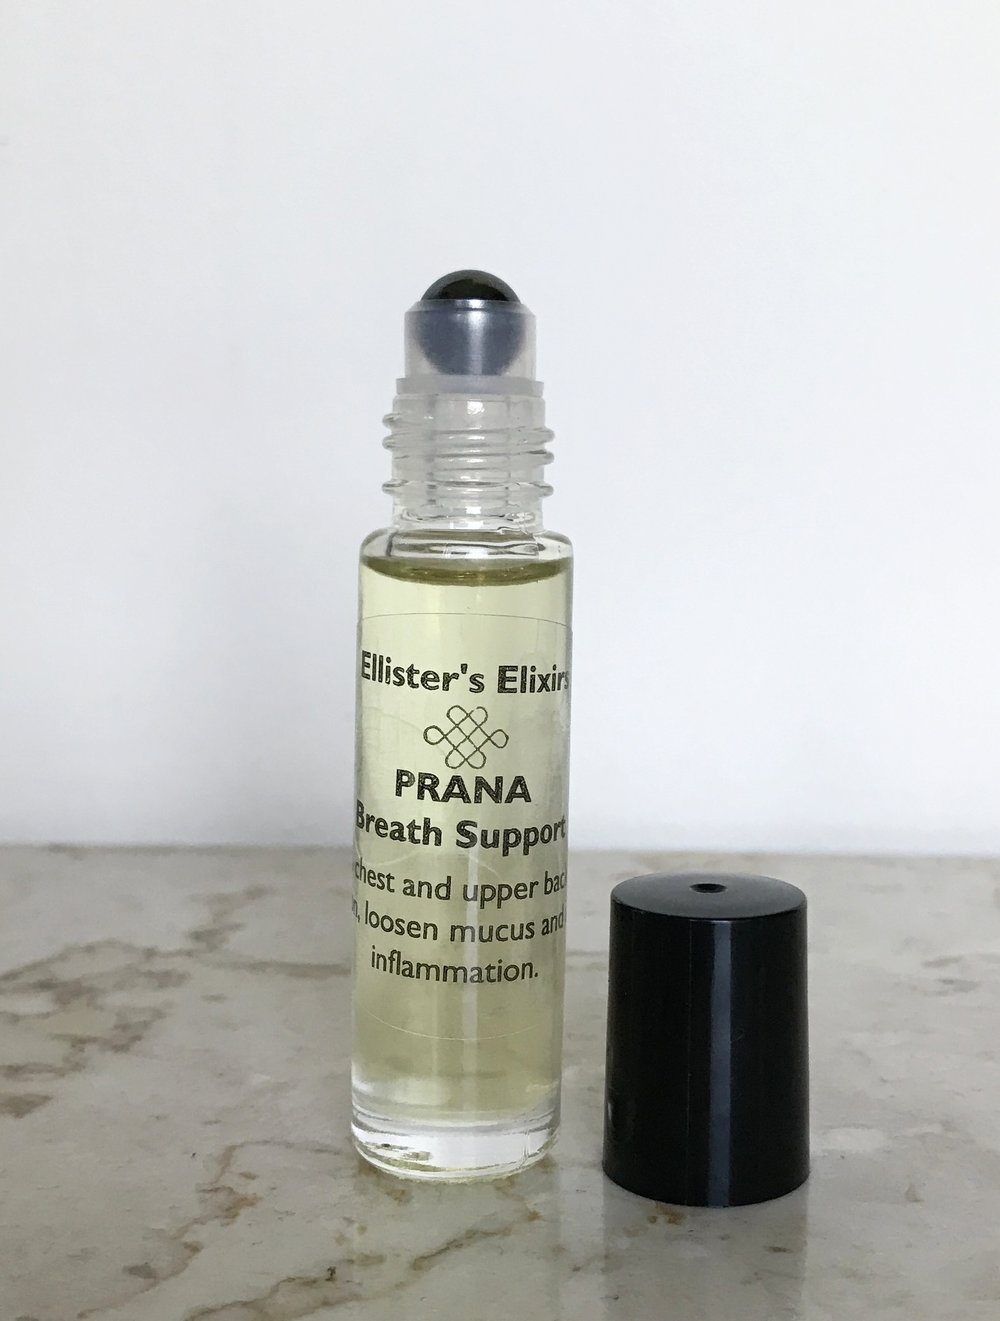 Prana-Breath Support